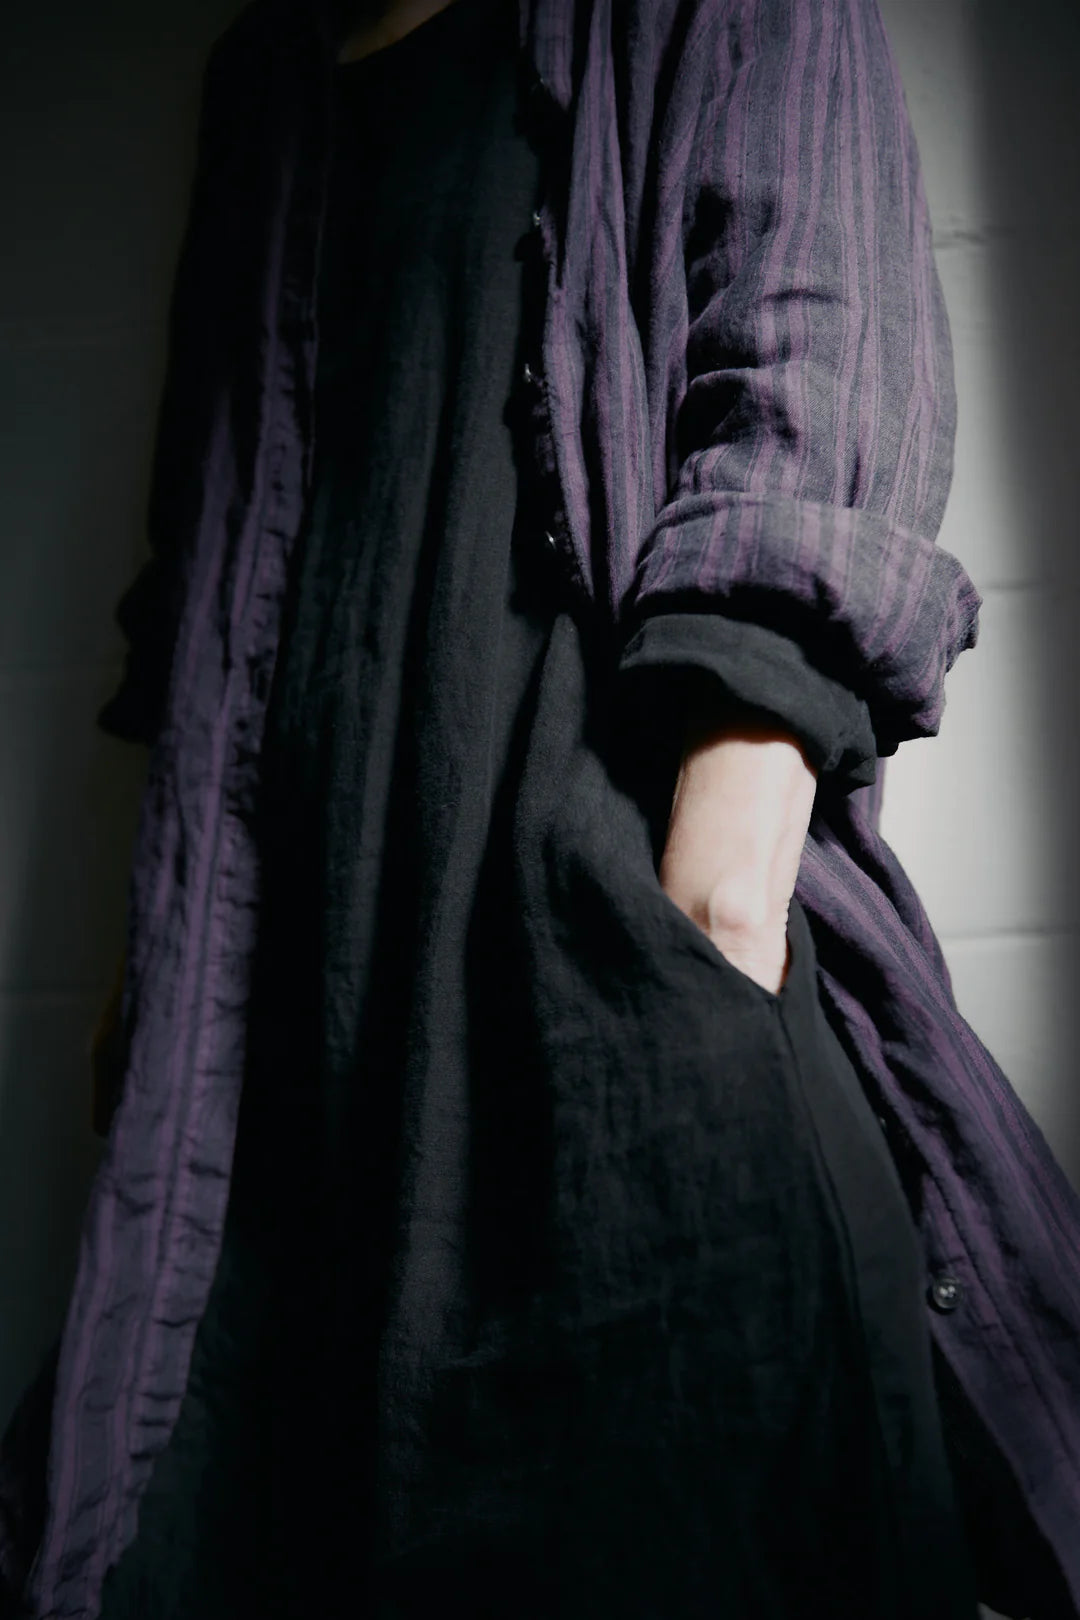 Elodie Dress - Black Linen